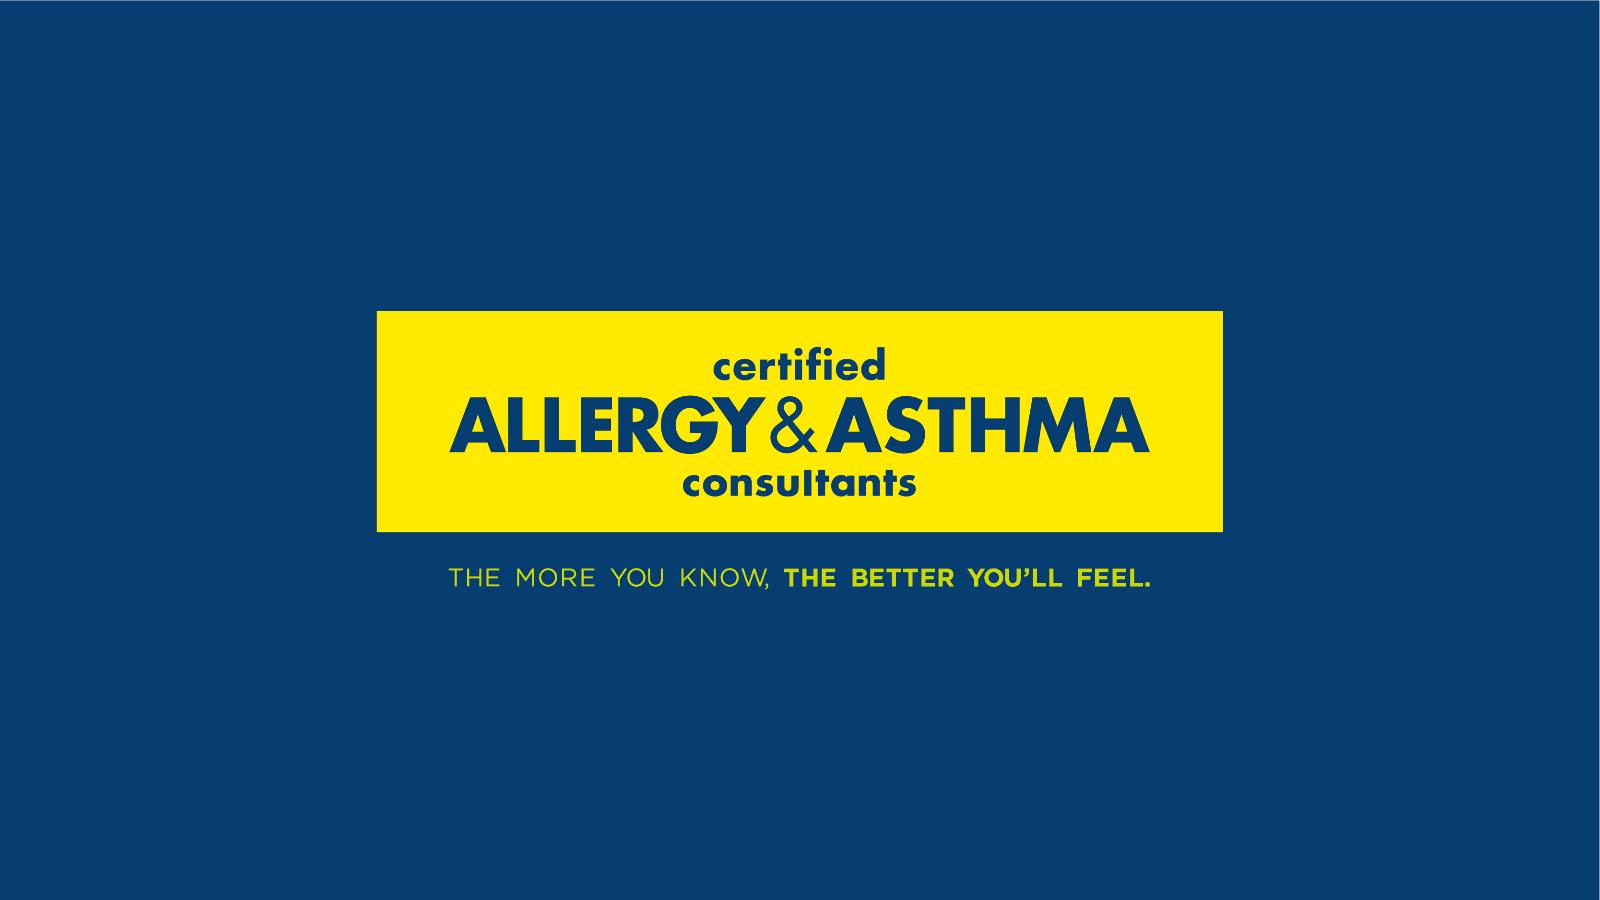 Logo Design & Brand Identity | Certified Allergy & Asthma Consultants